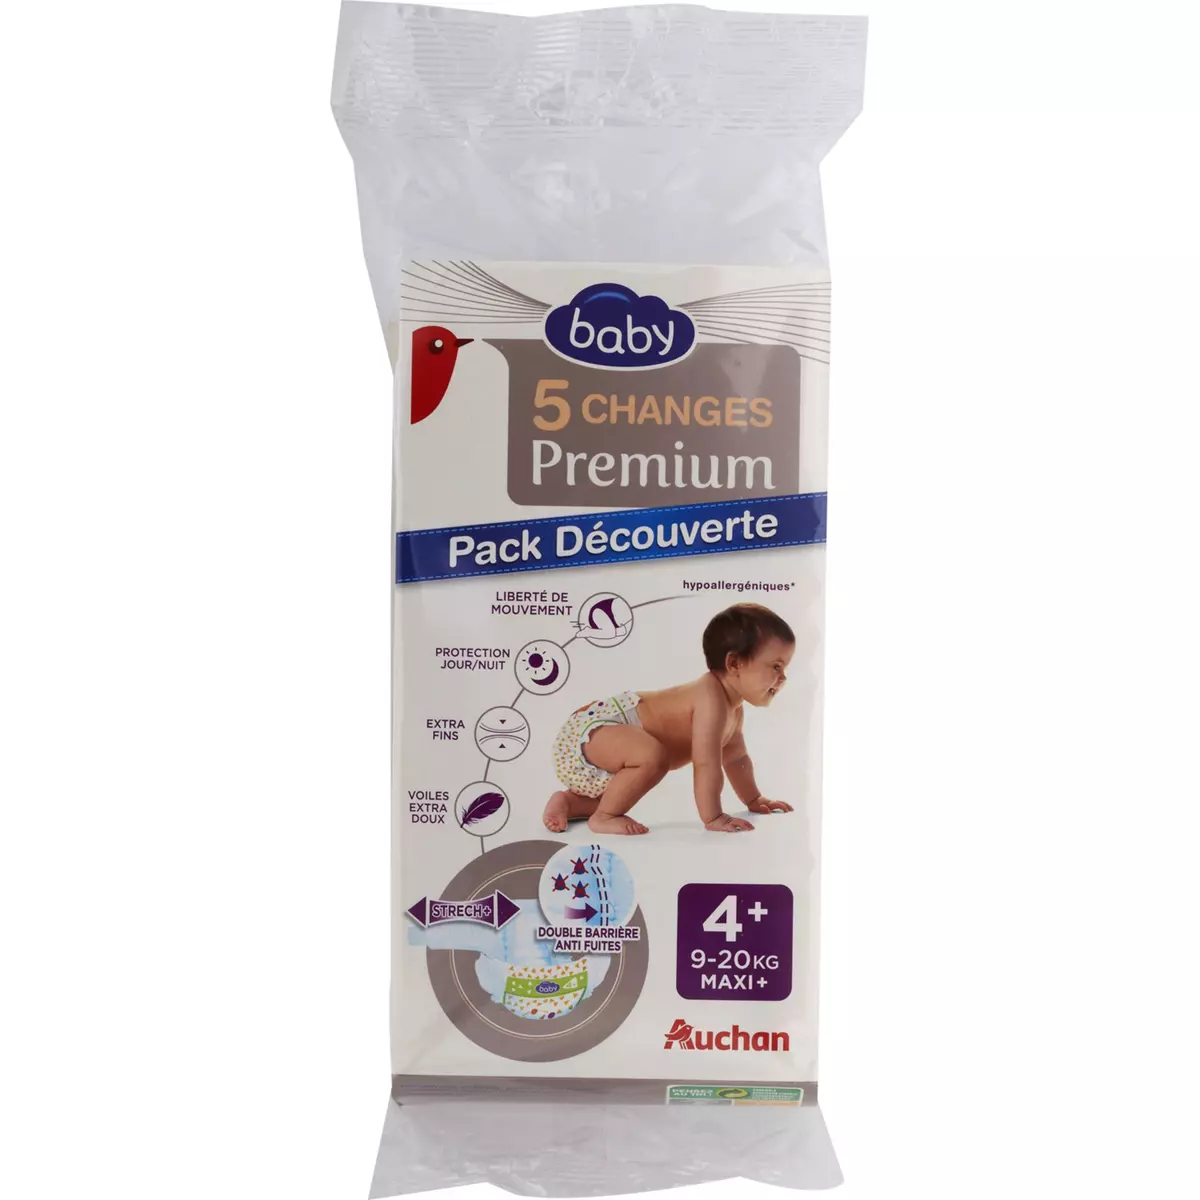 AUCHAN BABY Couches premium pack découverte taille 4+ (9-20kg) 5 couches